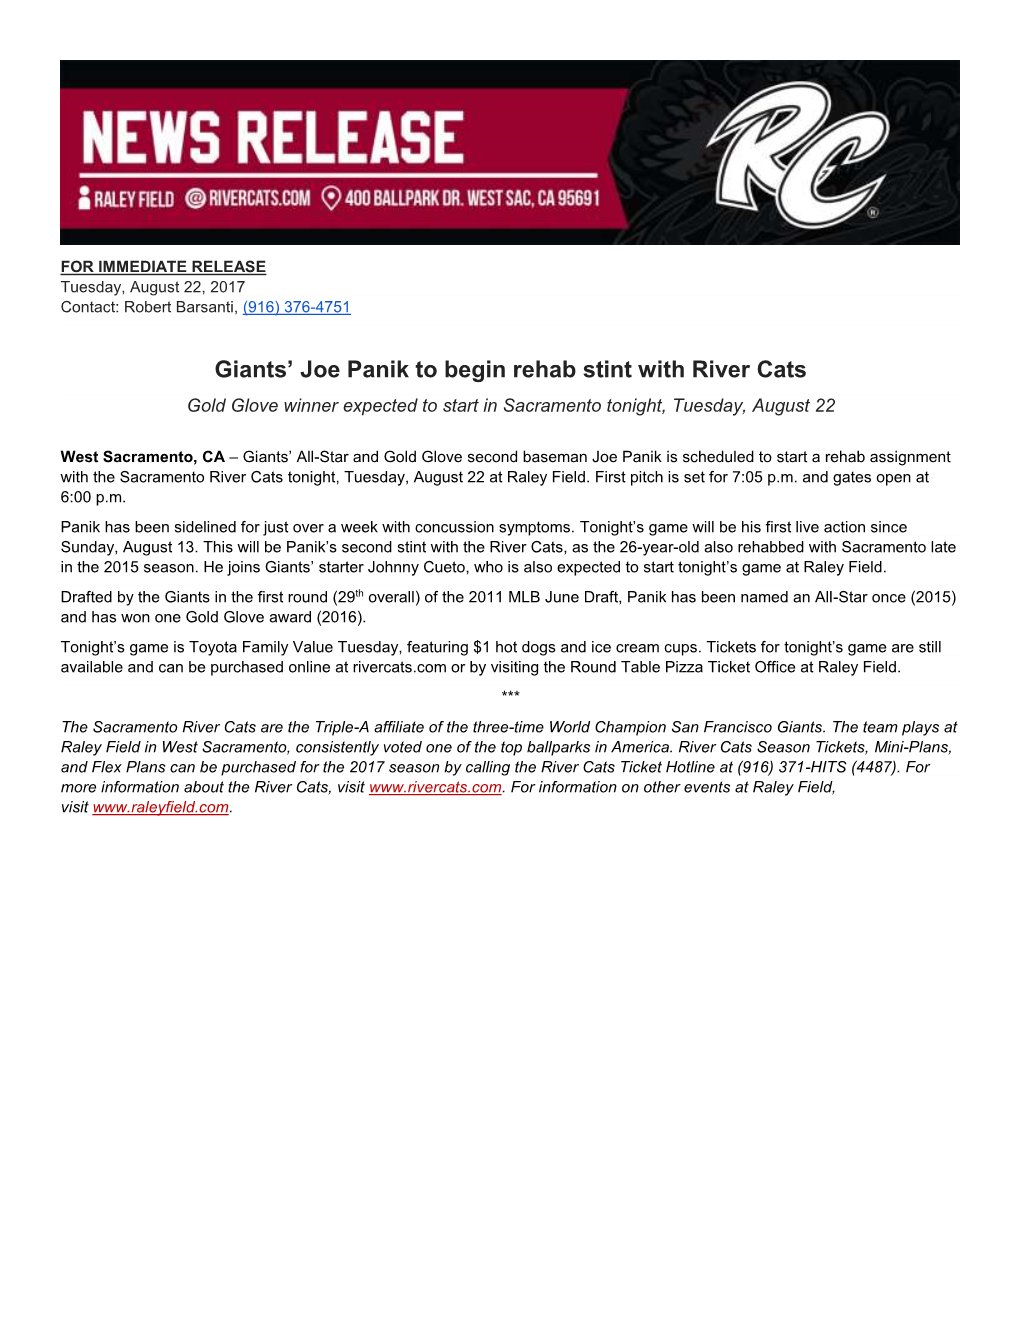 Giants' Joe Panik to Begin Rehab Stint with River Cats